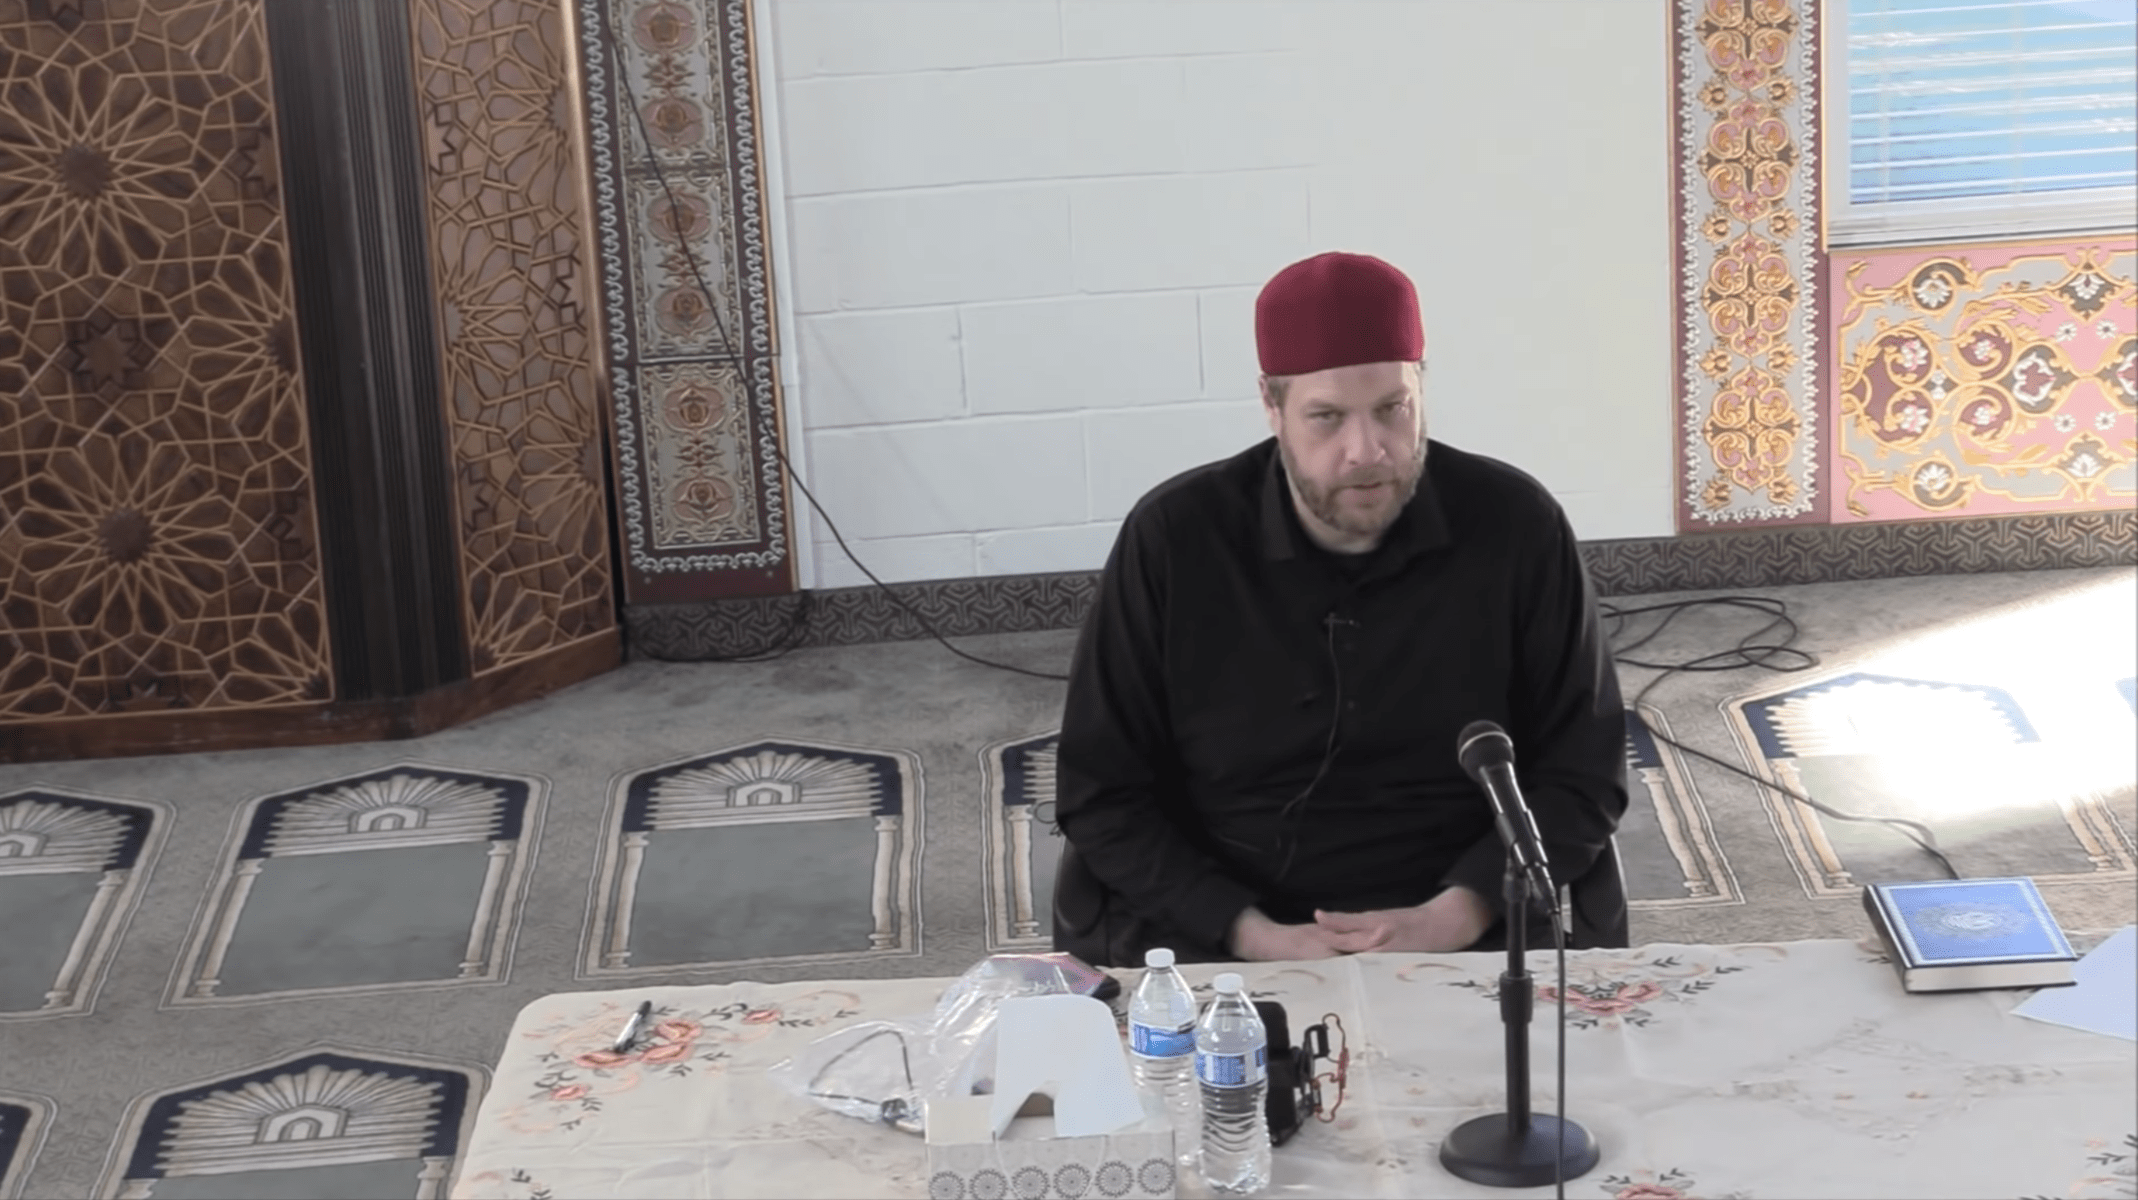 Suhaib Webb – The Struggles of Muslims in America